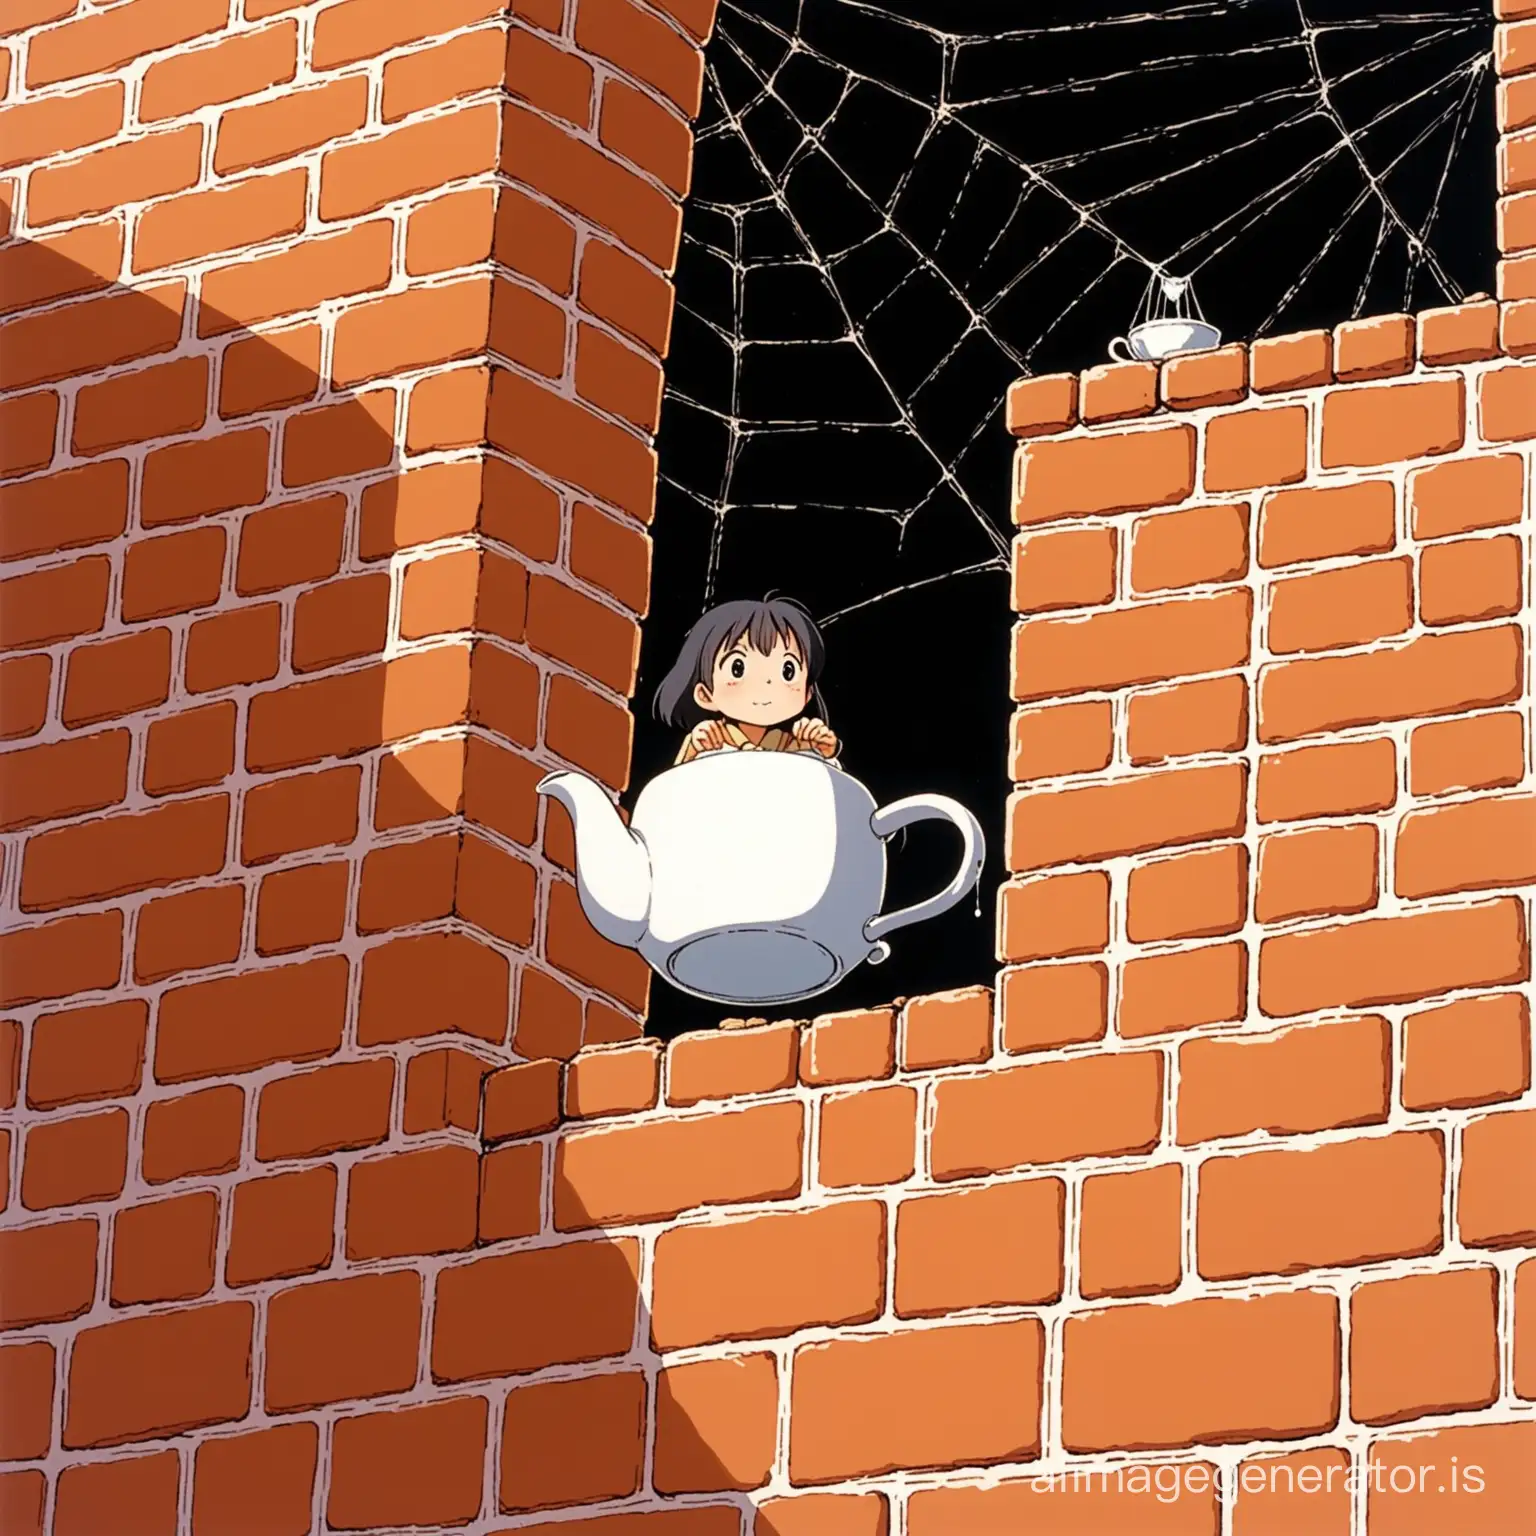 MiniPauchok-Descending-on-Cobweb-into-Tea-Cup-Anime-Studio-Ghibli-Style